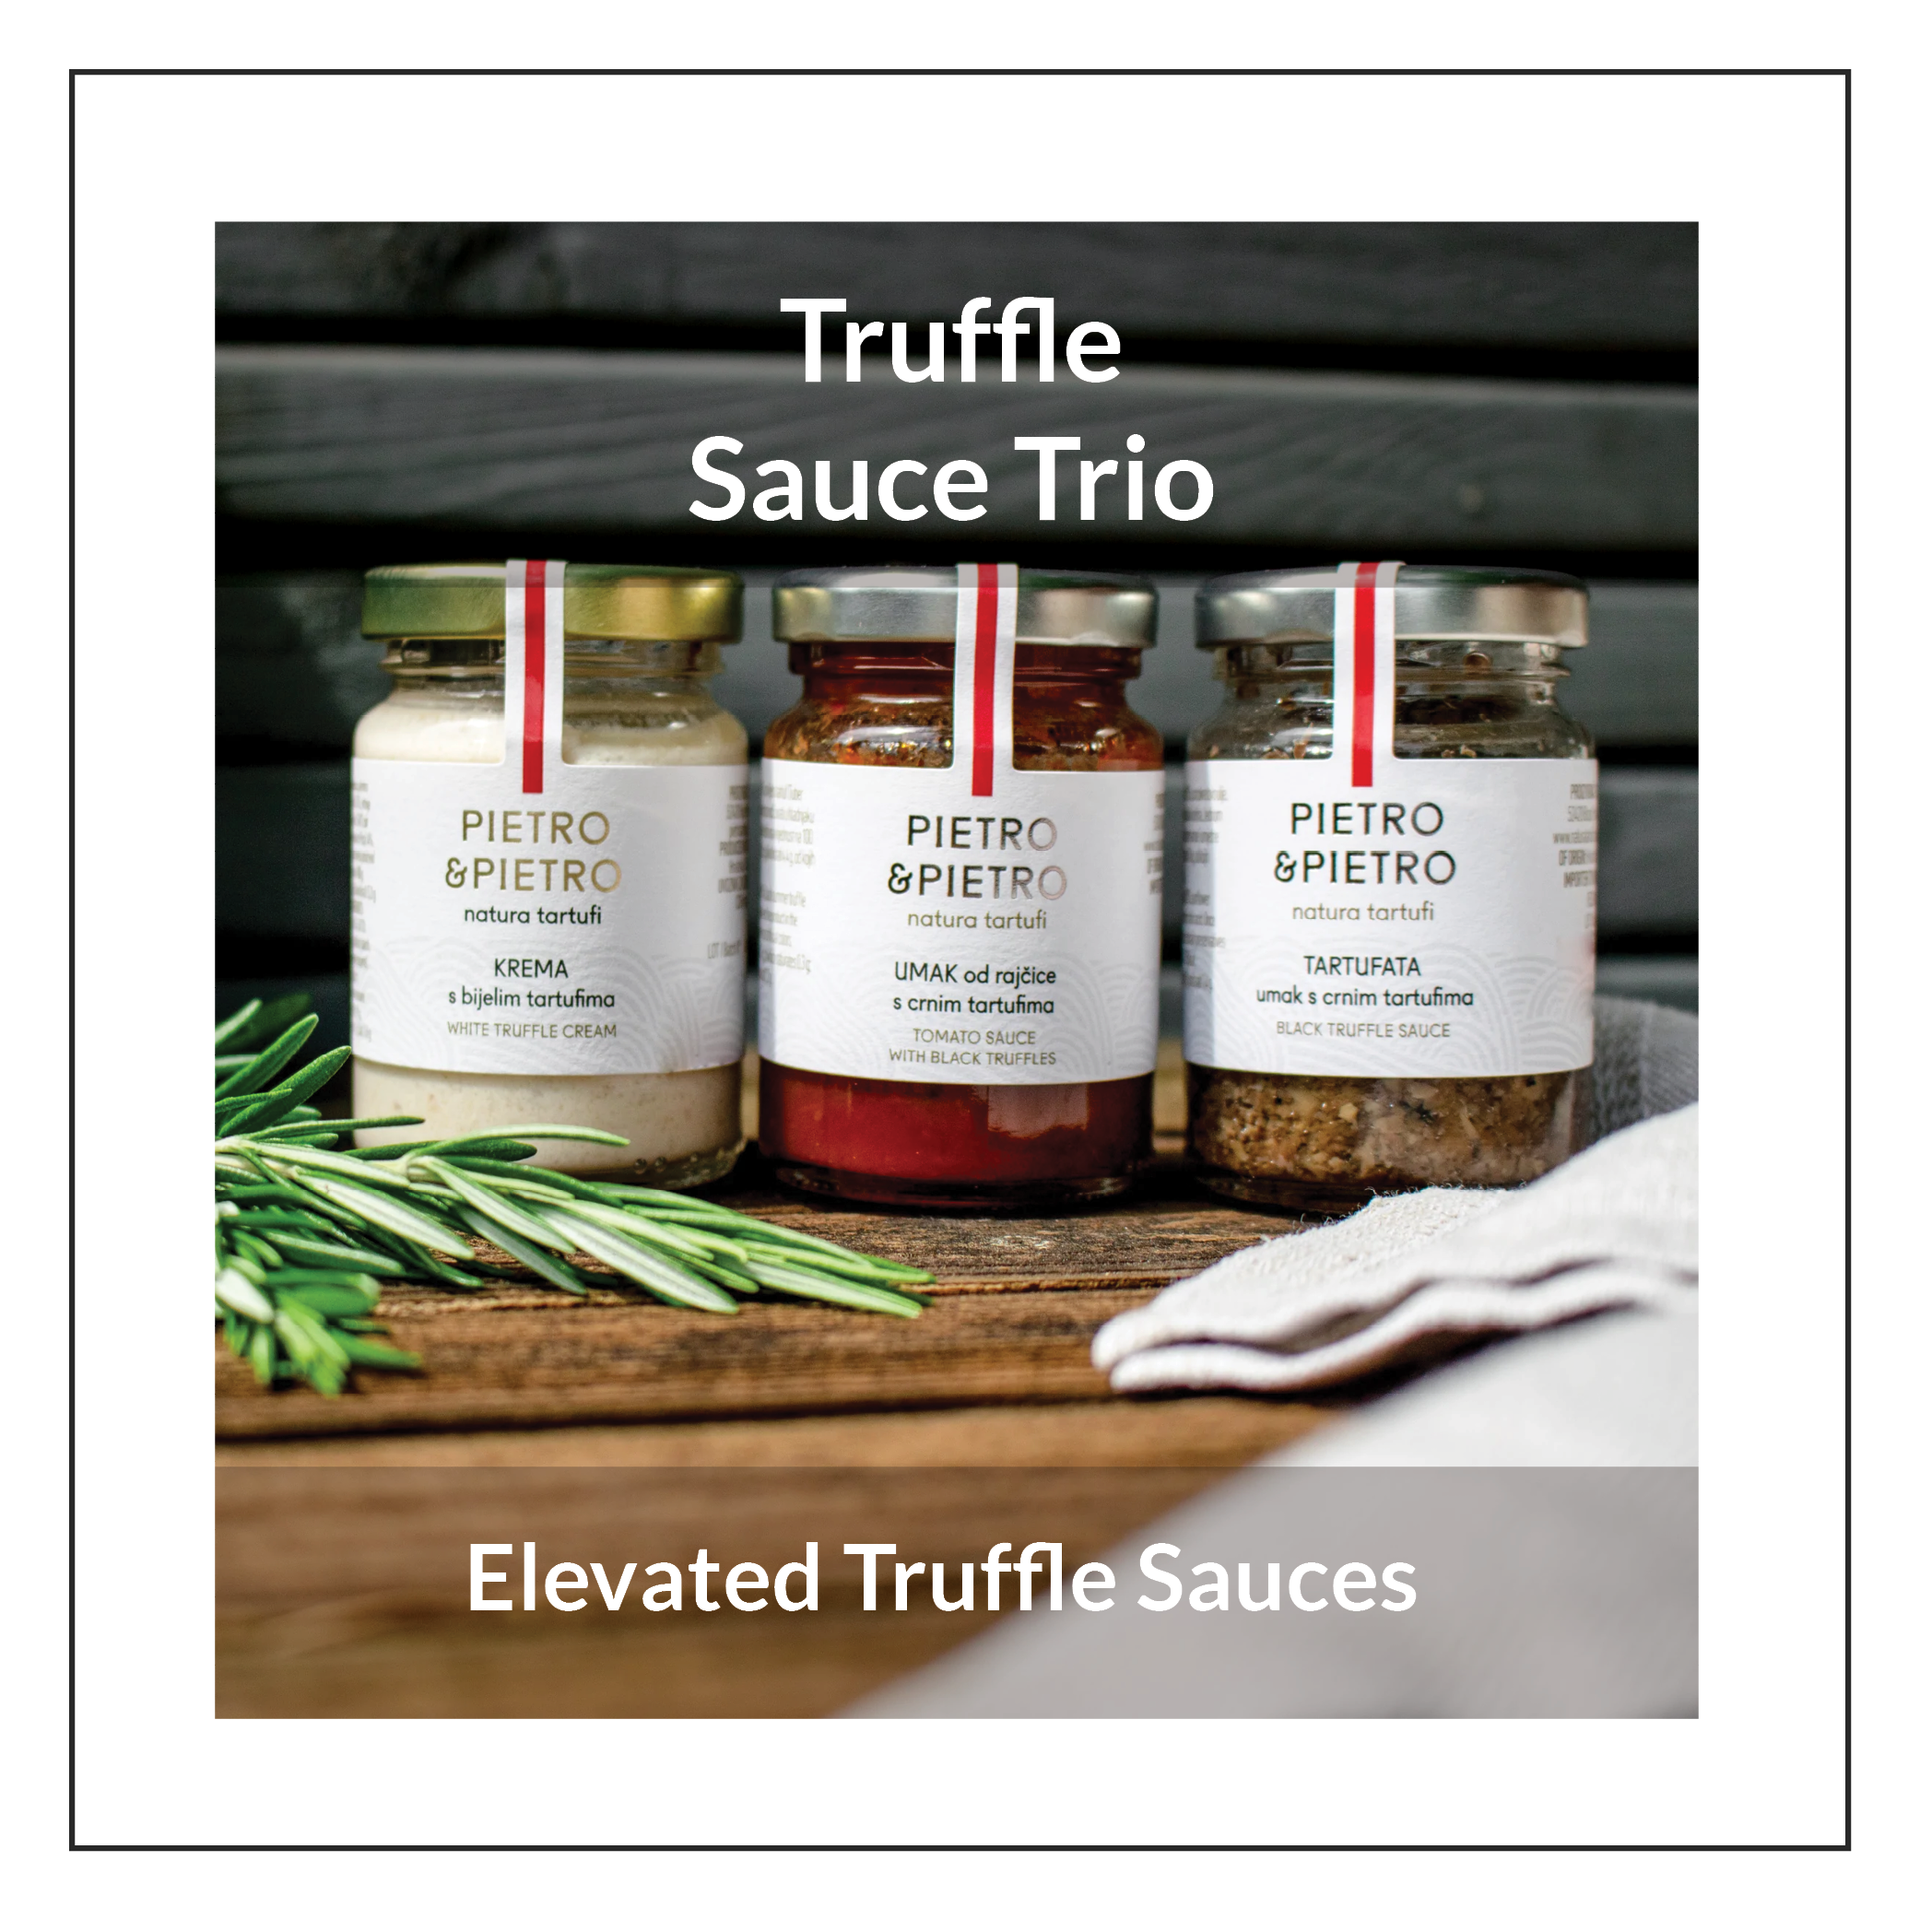 Tartufata (black truffle sauce) - Pietro&Pietro